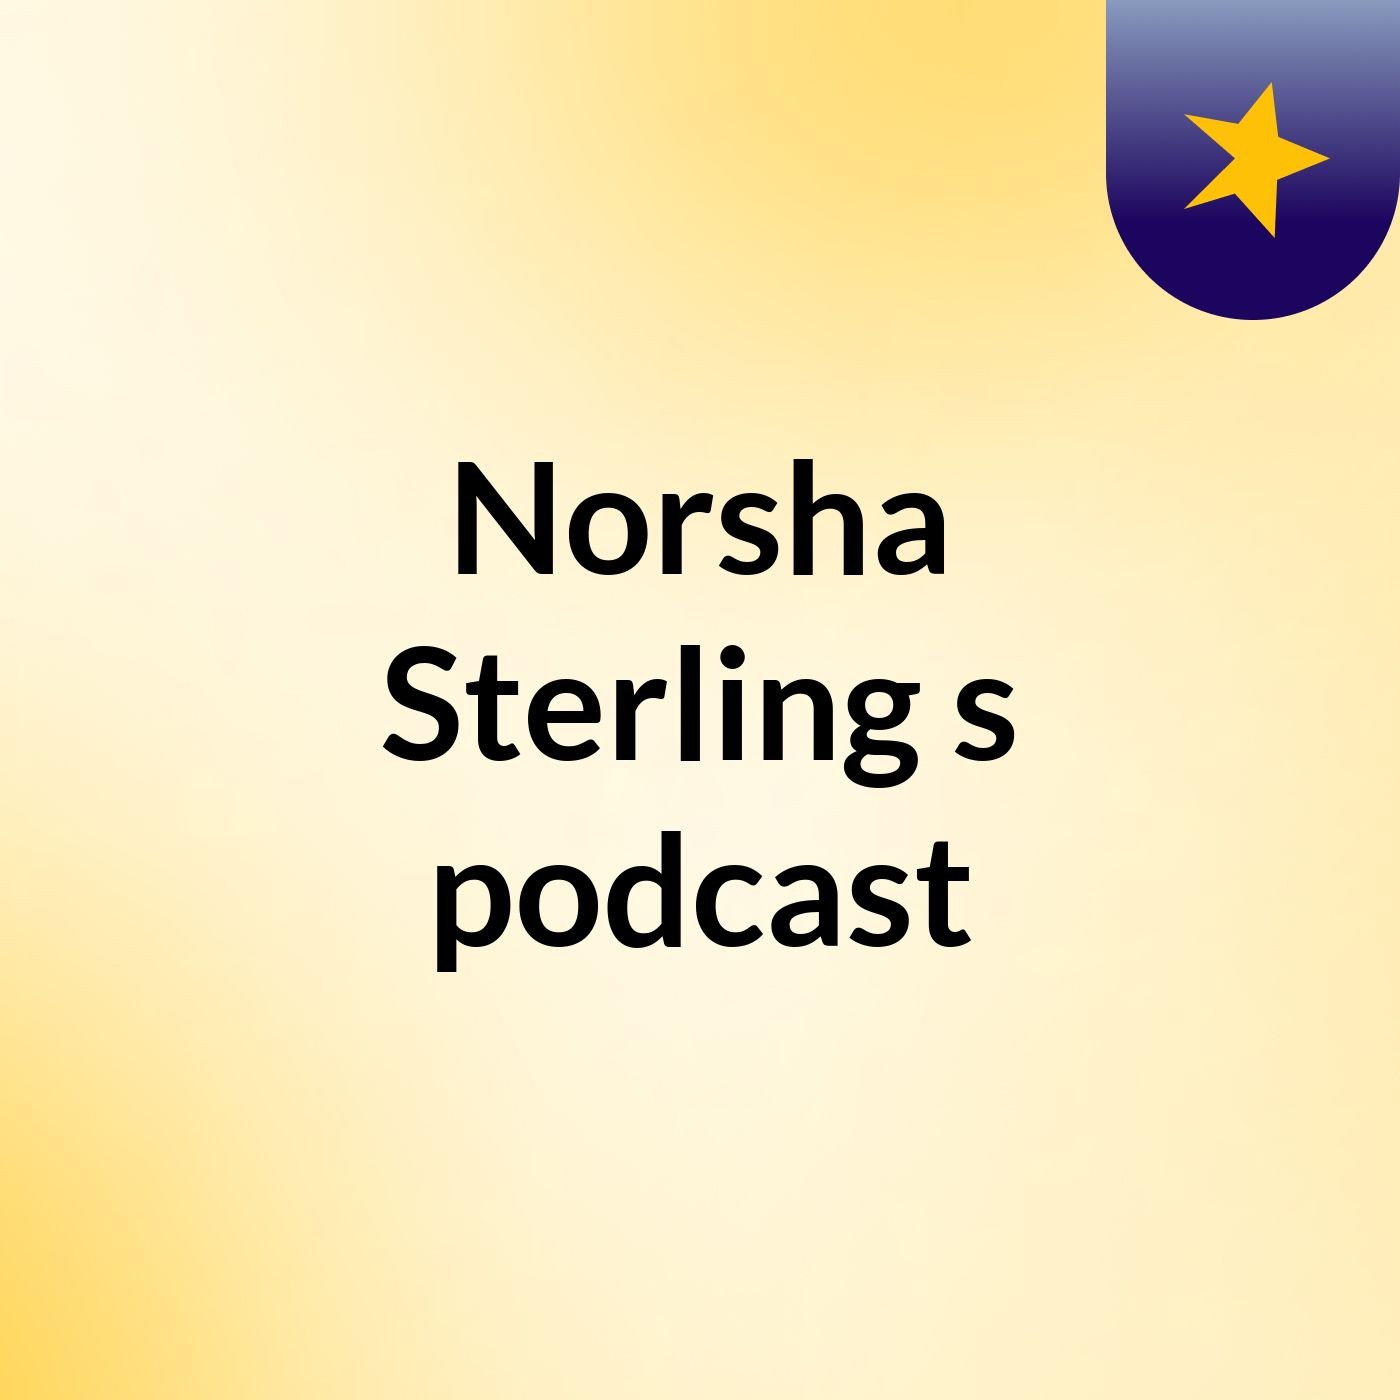 Episode 3 - Norsha Sterling's podcast